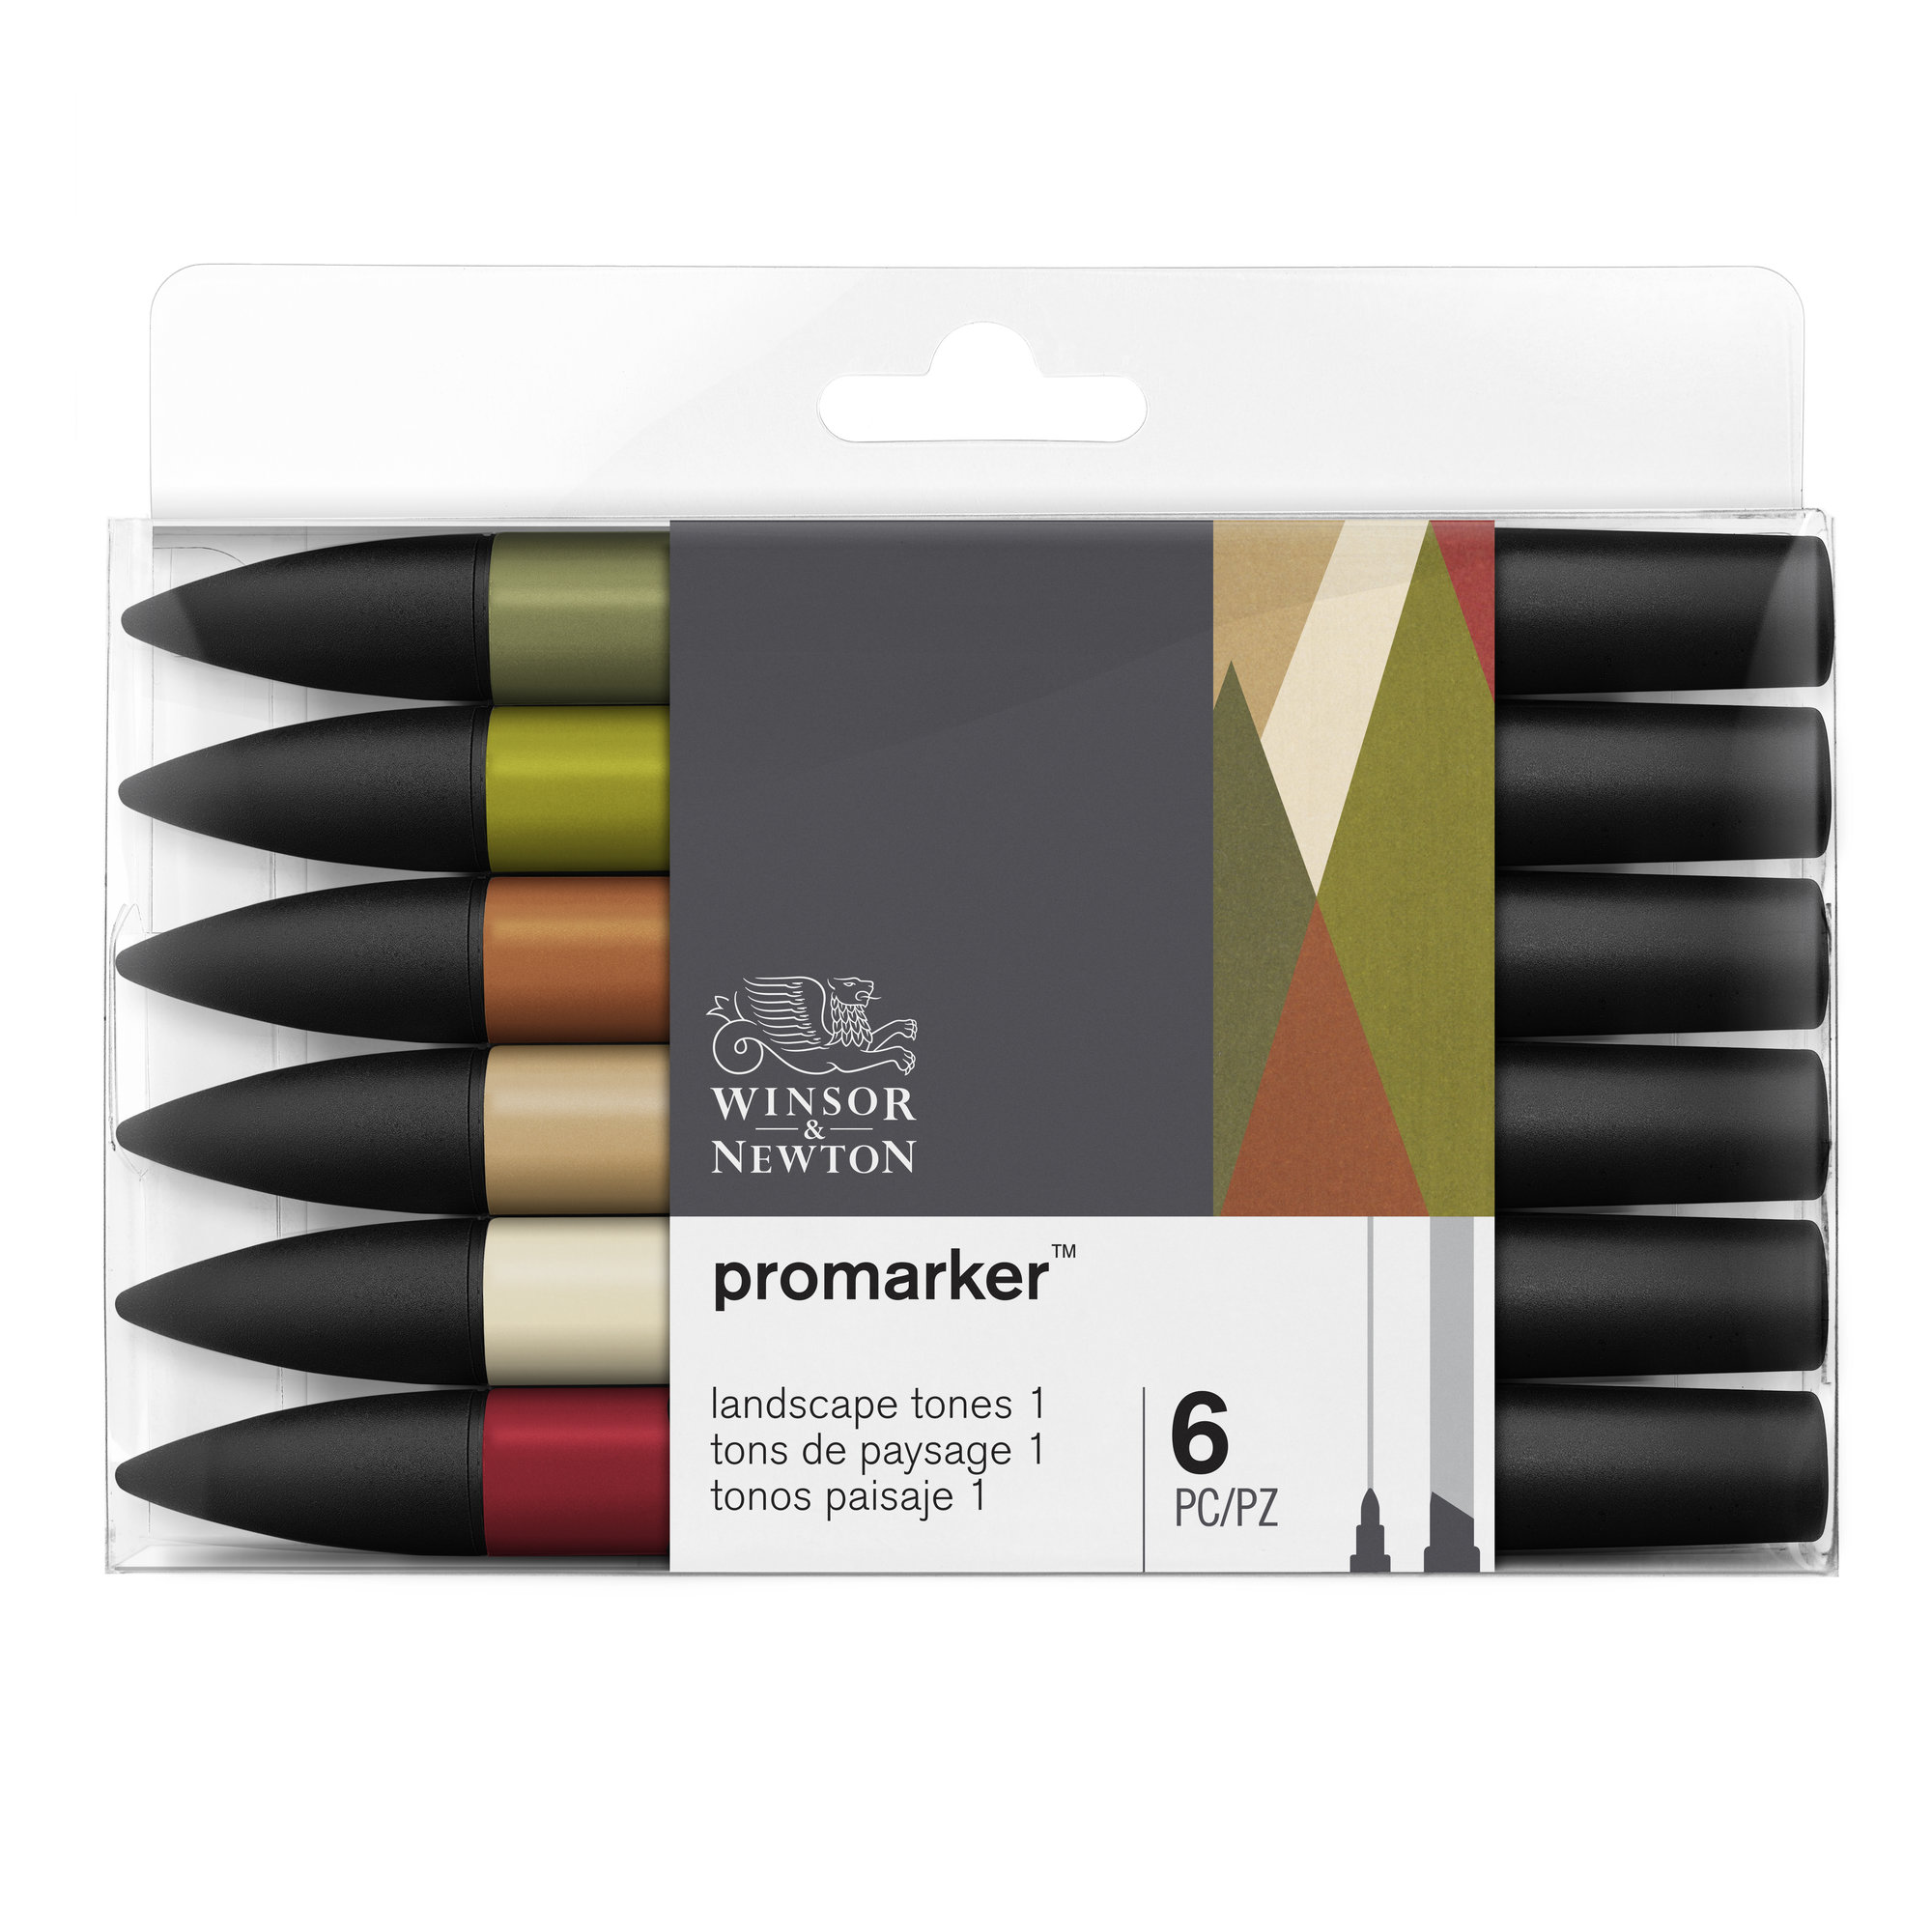 Winsor & Newton Promarker Graphic Drawing Pens Landscape Tones 1 Set of 6 Pens